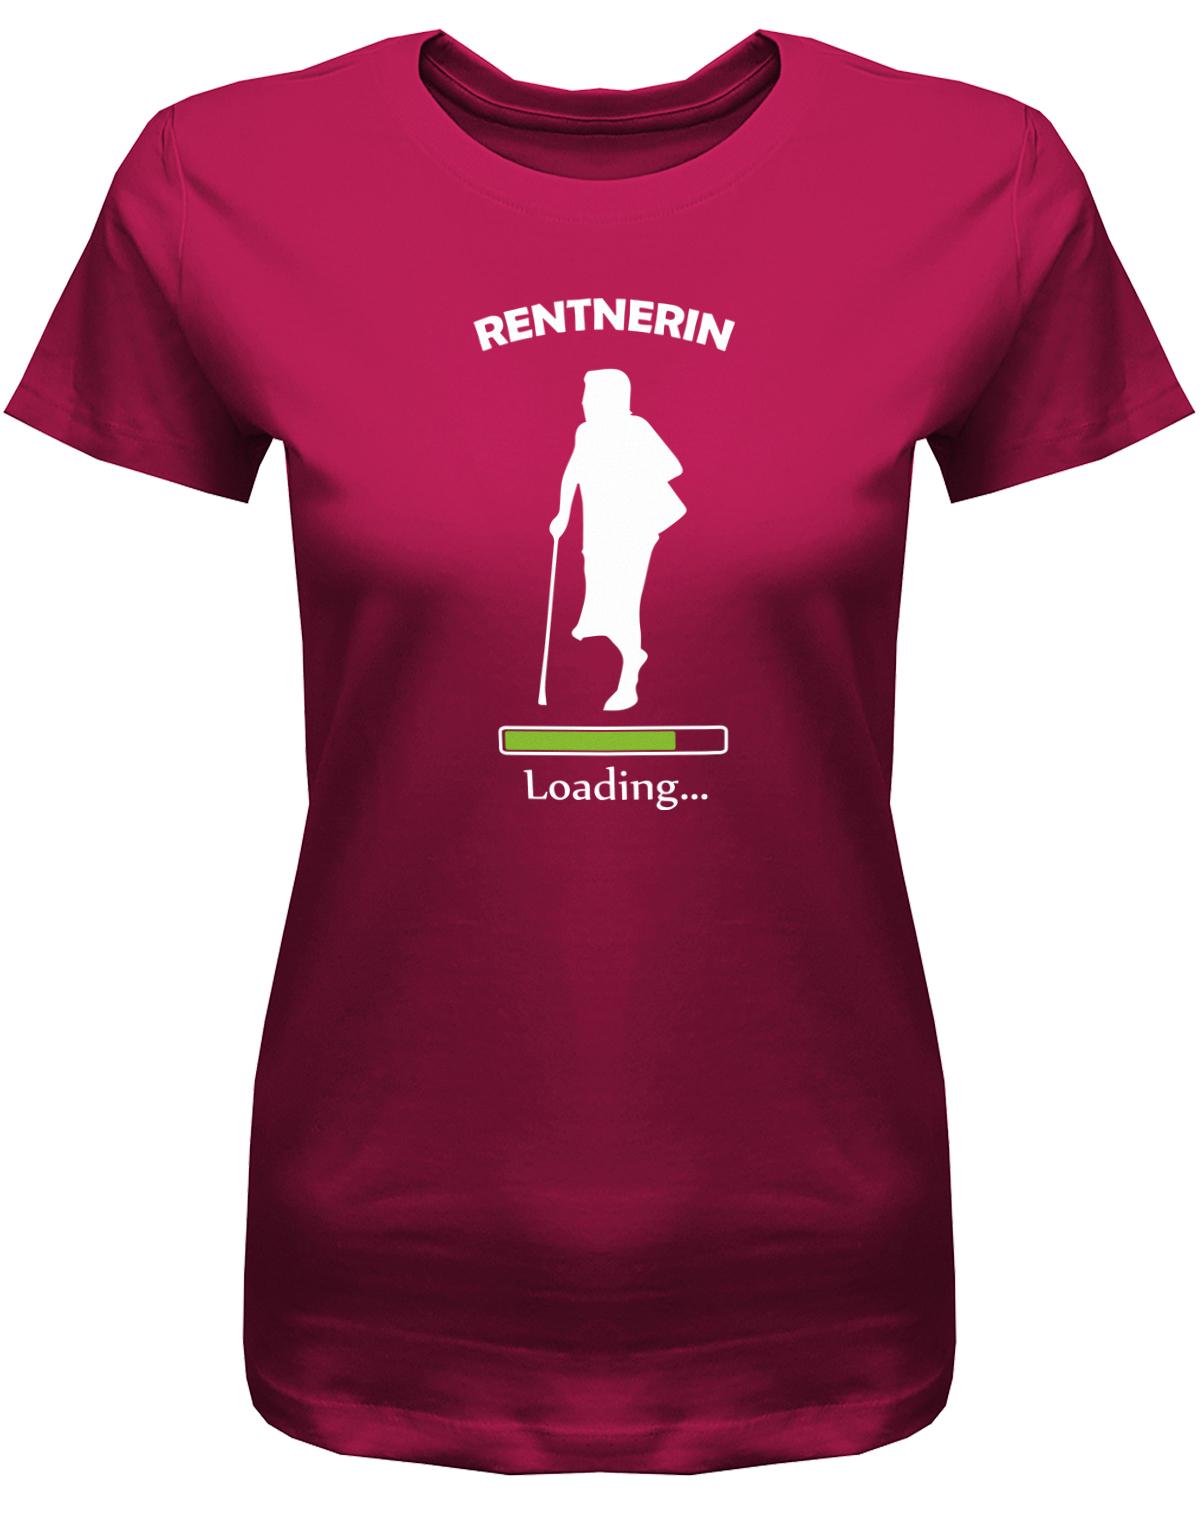 Rentnerin-Loading-Damen-Shirt-Sorbet